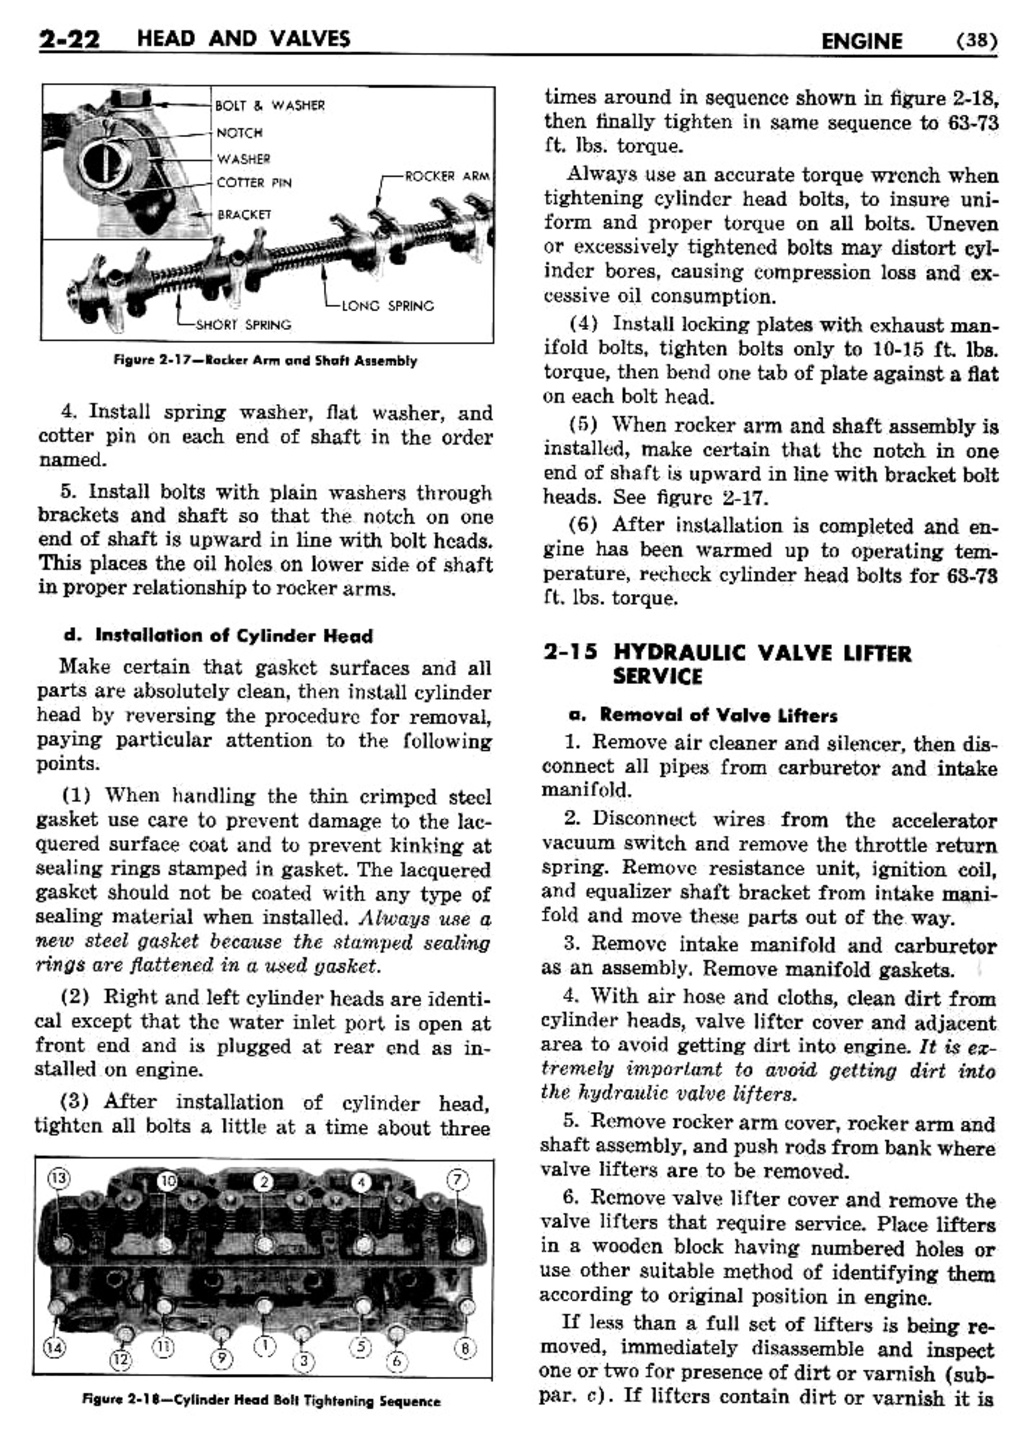 n_03 1955 Buick Shop Manual - Engine-022-022.jpg